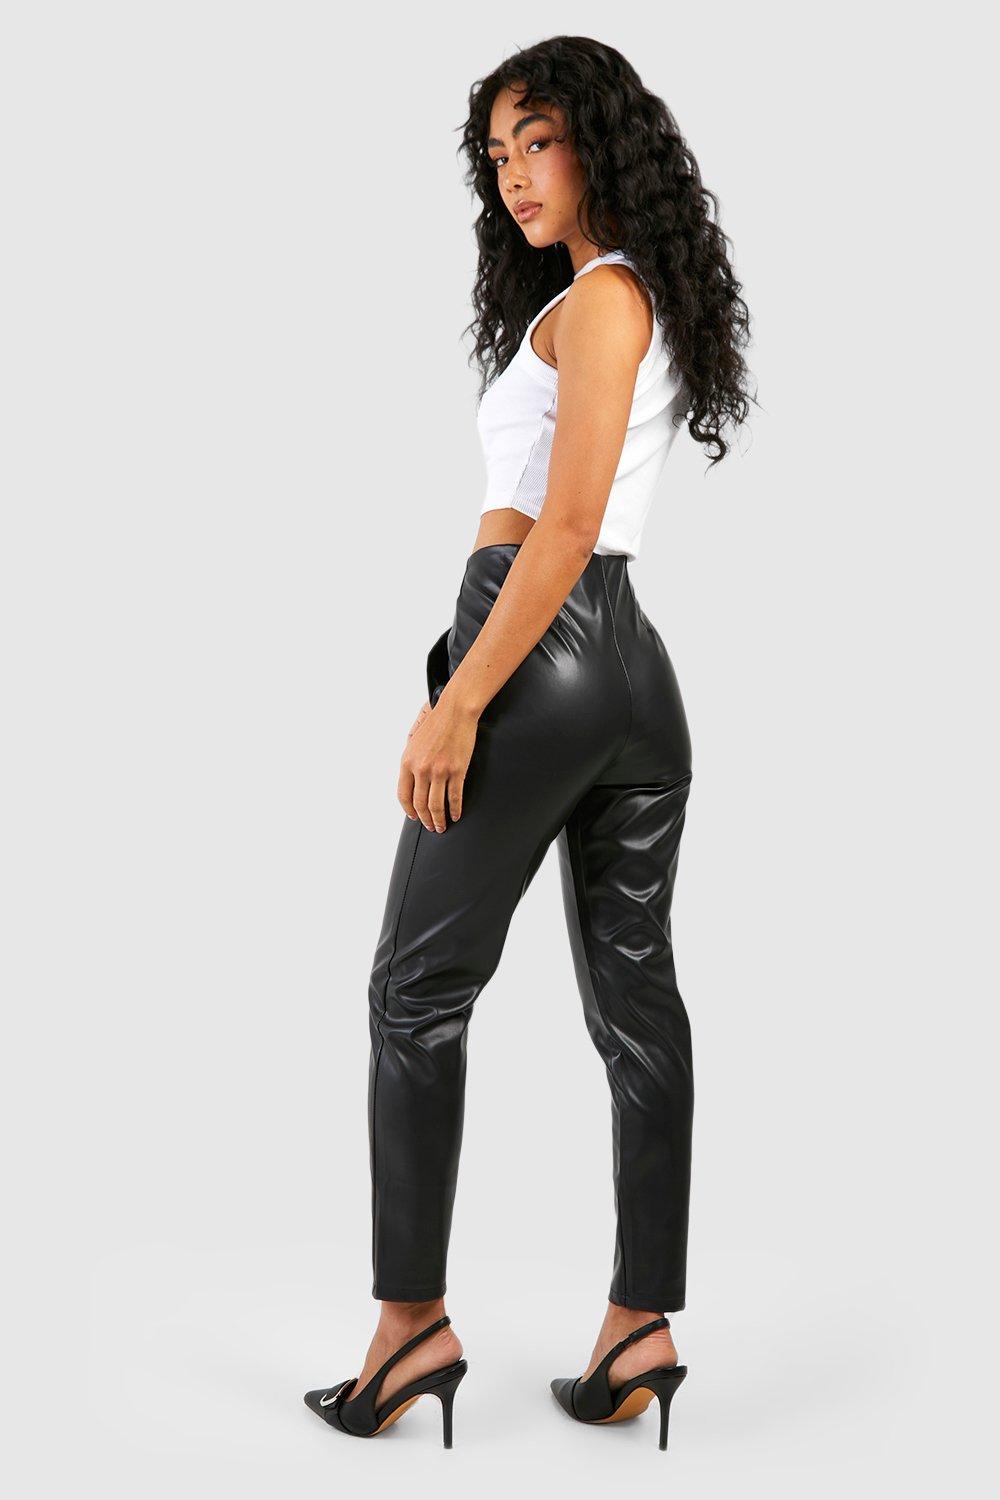 https://media.boohoo.com/i/boohoo/gzz80240_black_xl_1/female-black-leather-look-legging